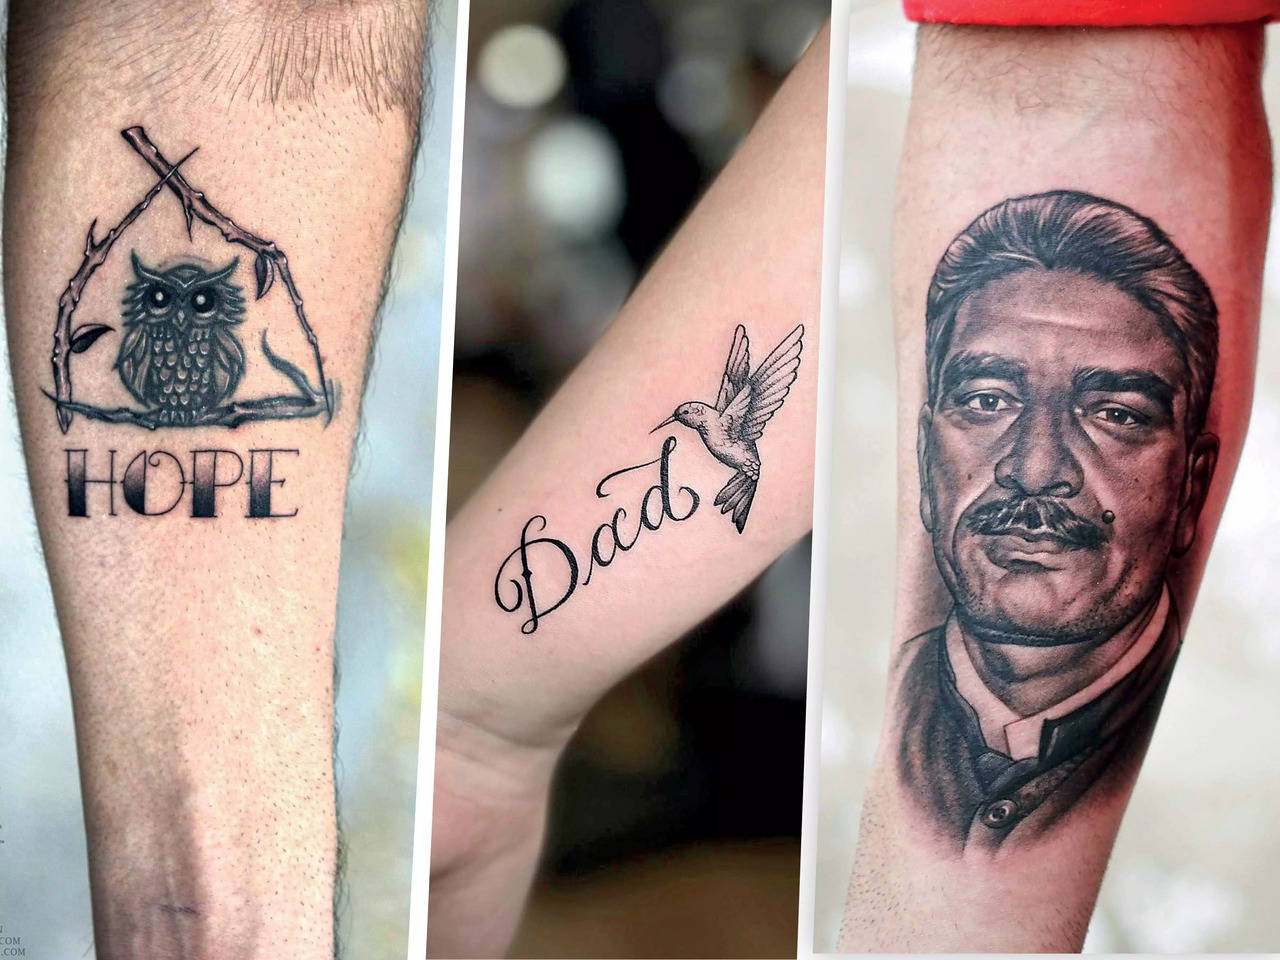 ननतल म टट क बढत करज यवओ क लभ रह य खस डजइन  tattoo  business grows in town mostly youth affectionate to it  News18 हद